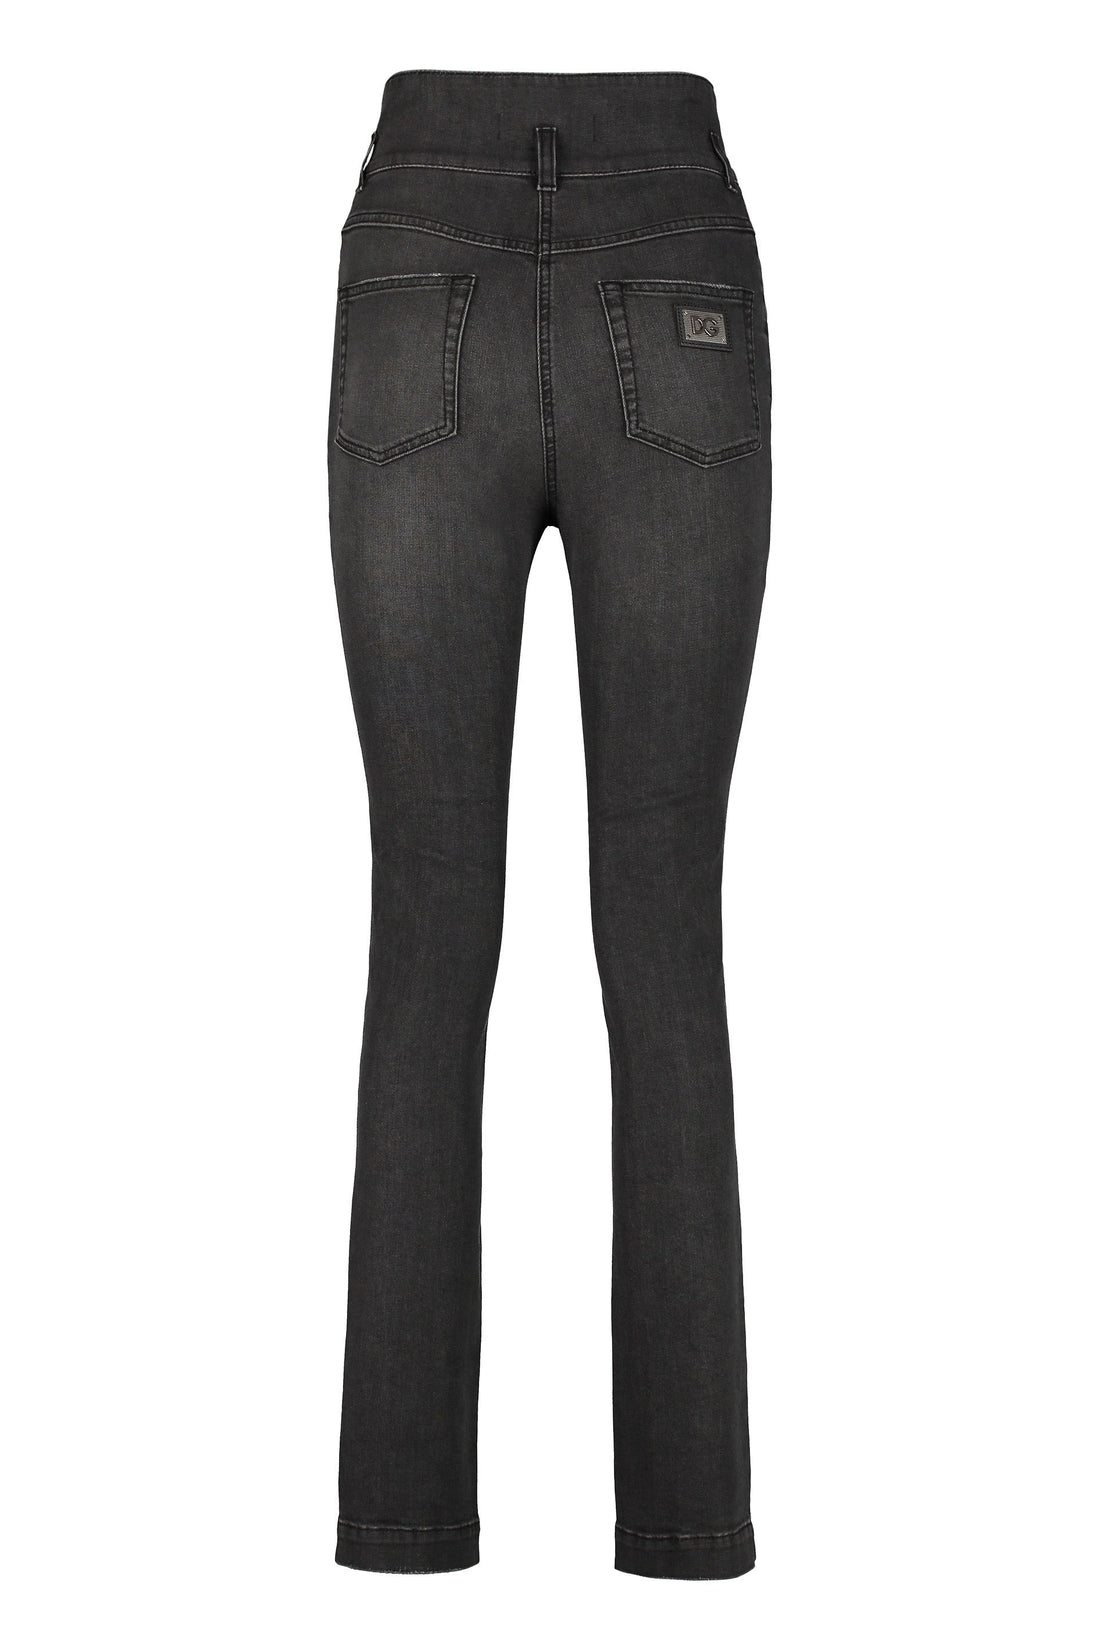 Dolce & Gabbana-OUTLET-SALE-High-rise slim fit jeans-ARCHIVIST